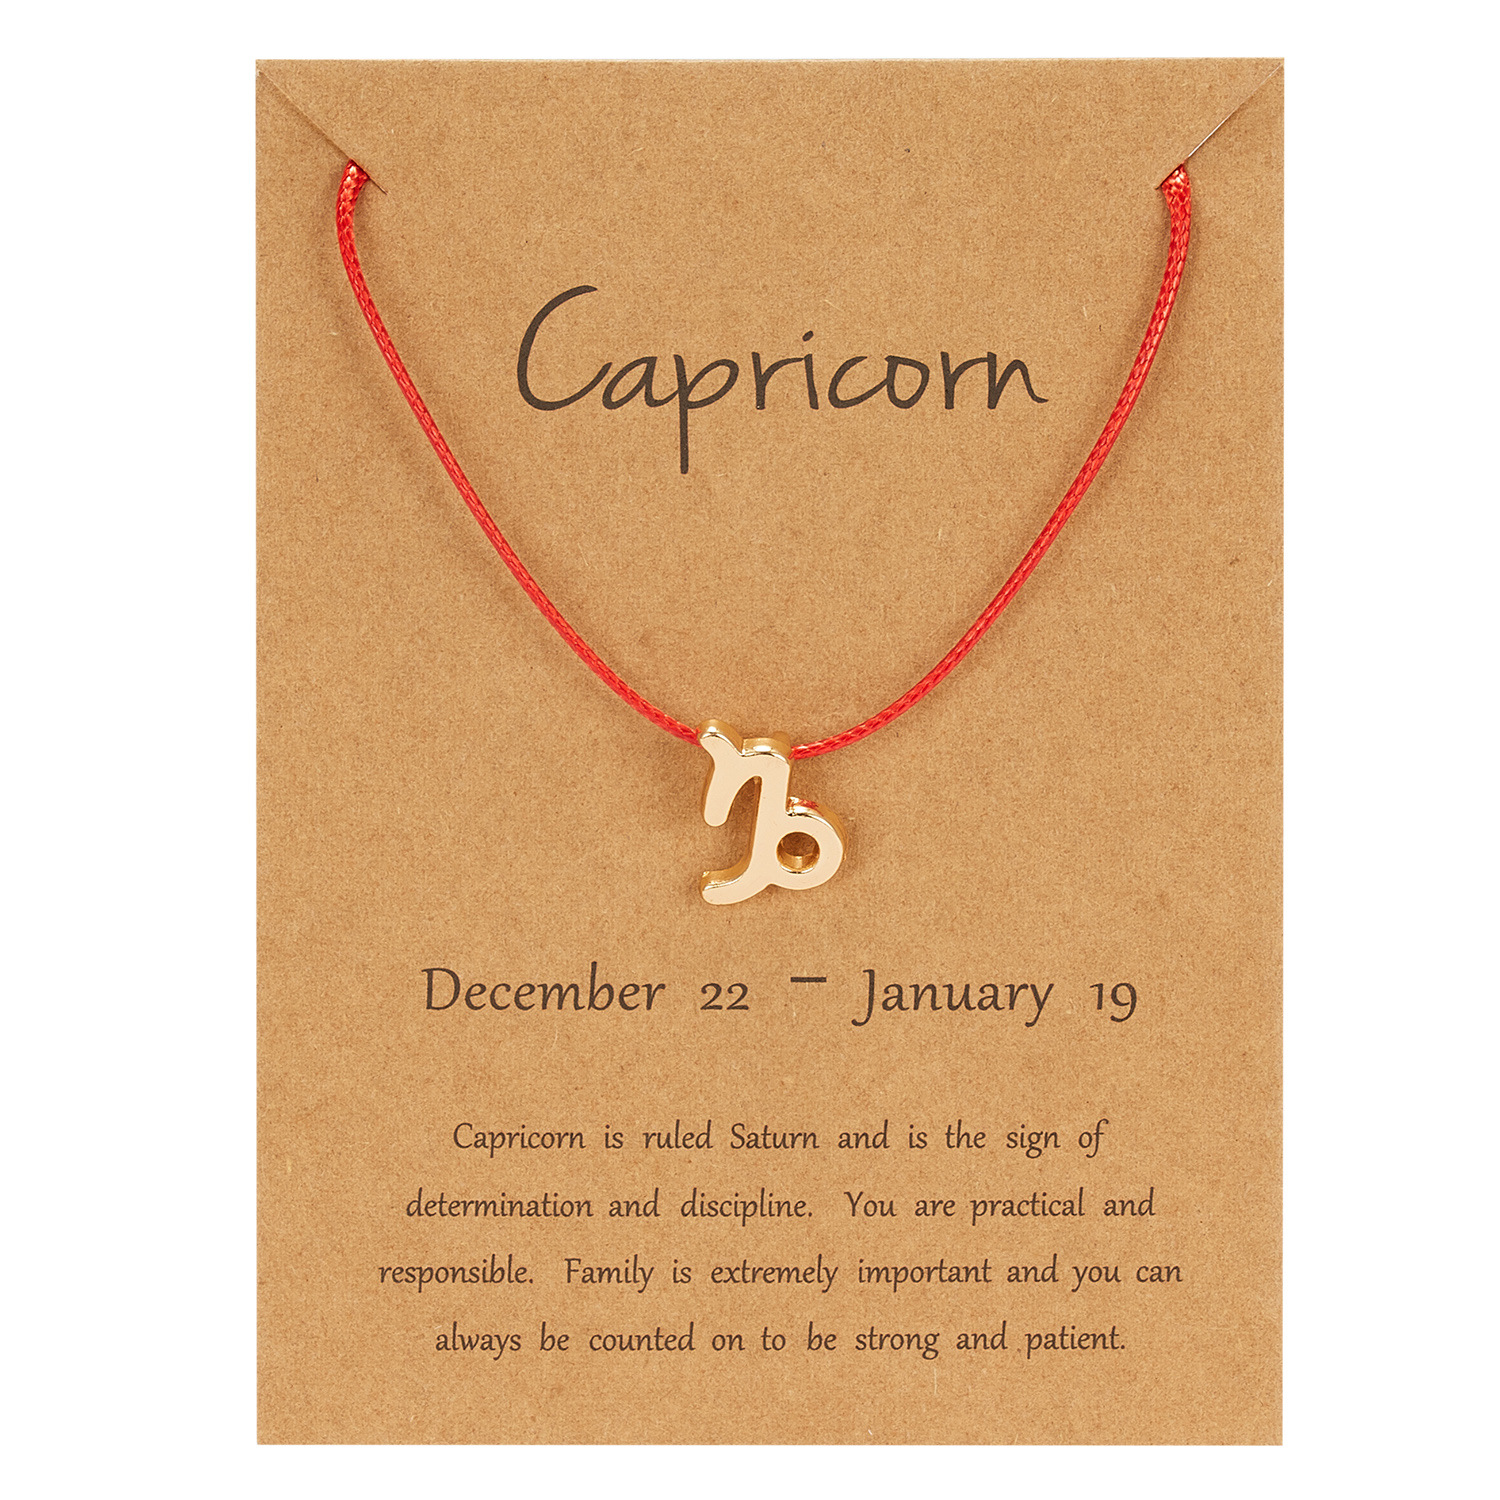 Capricorn(Red Rope)